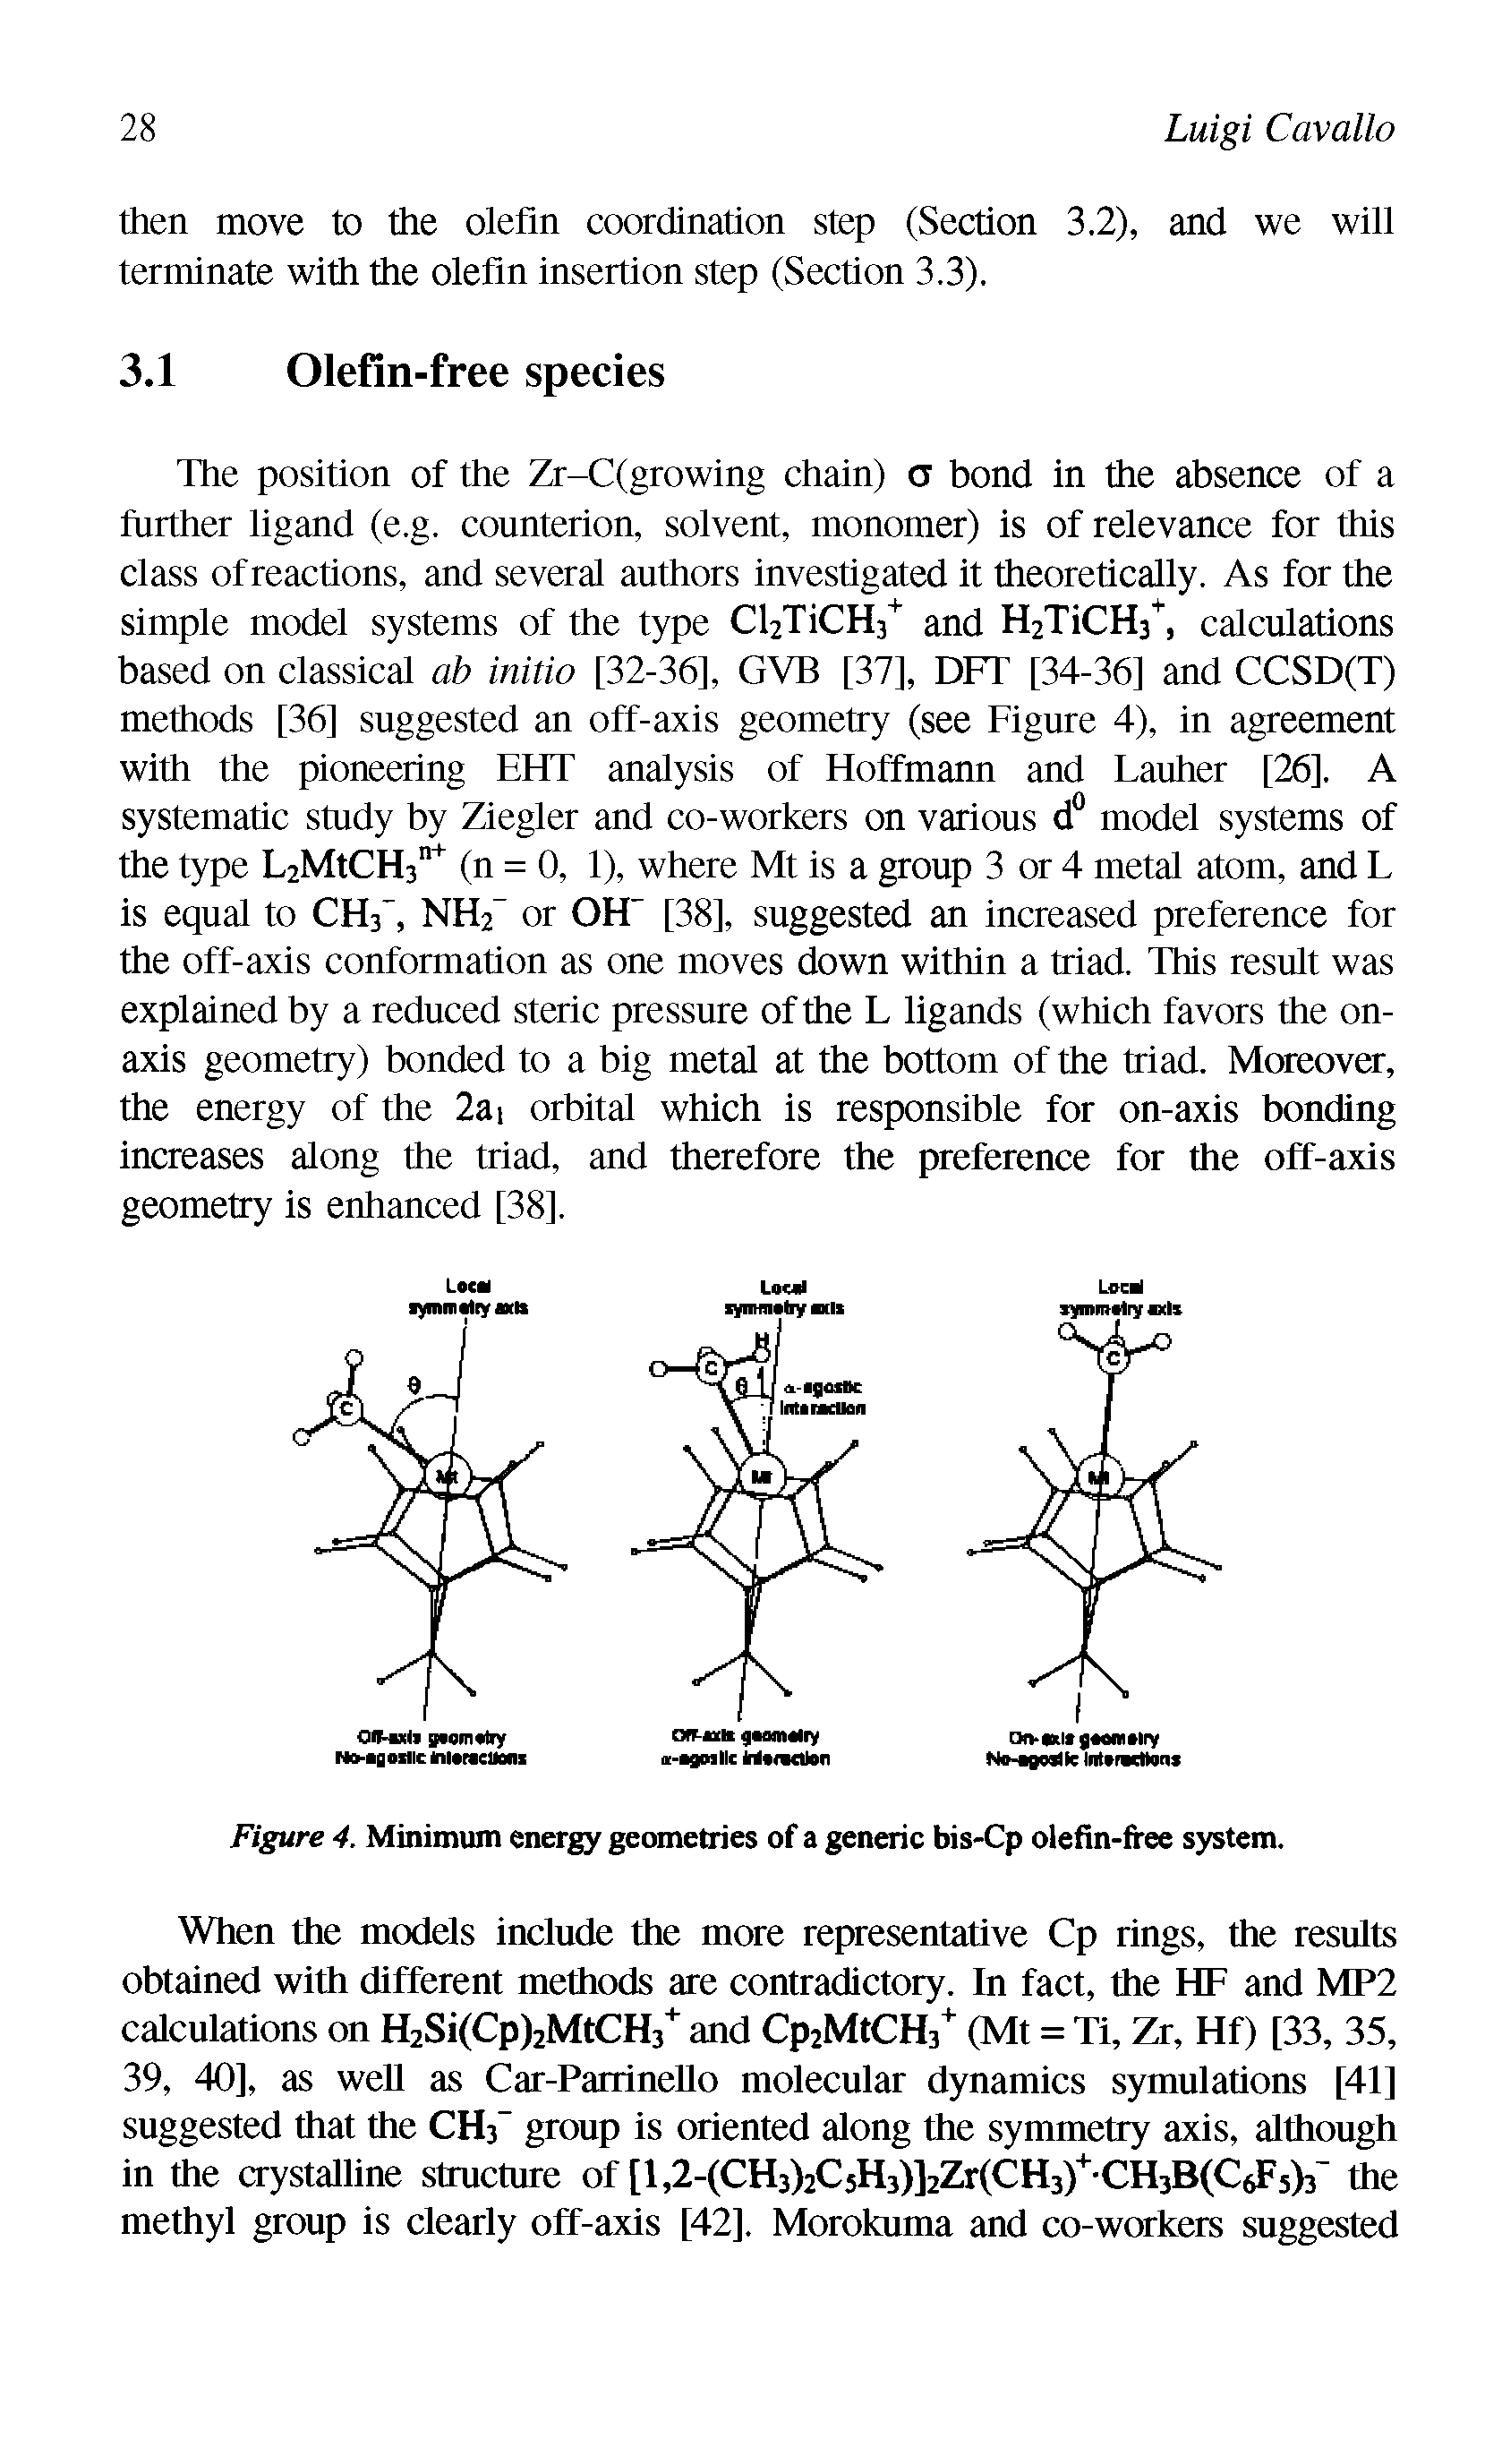 Figure 4. Minimum energy geometries of a generic bis-Cp olefin-free system.